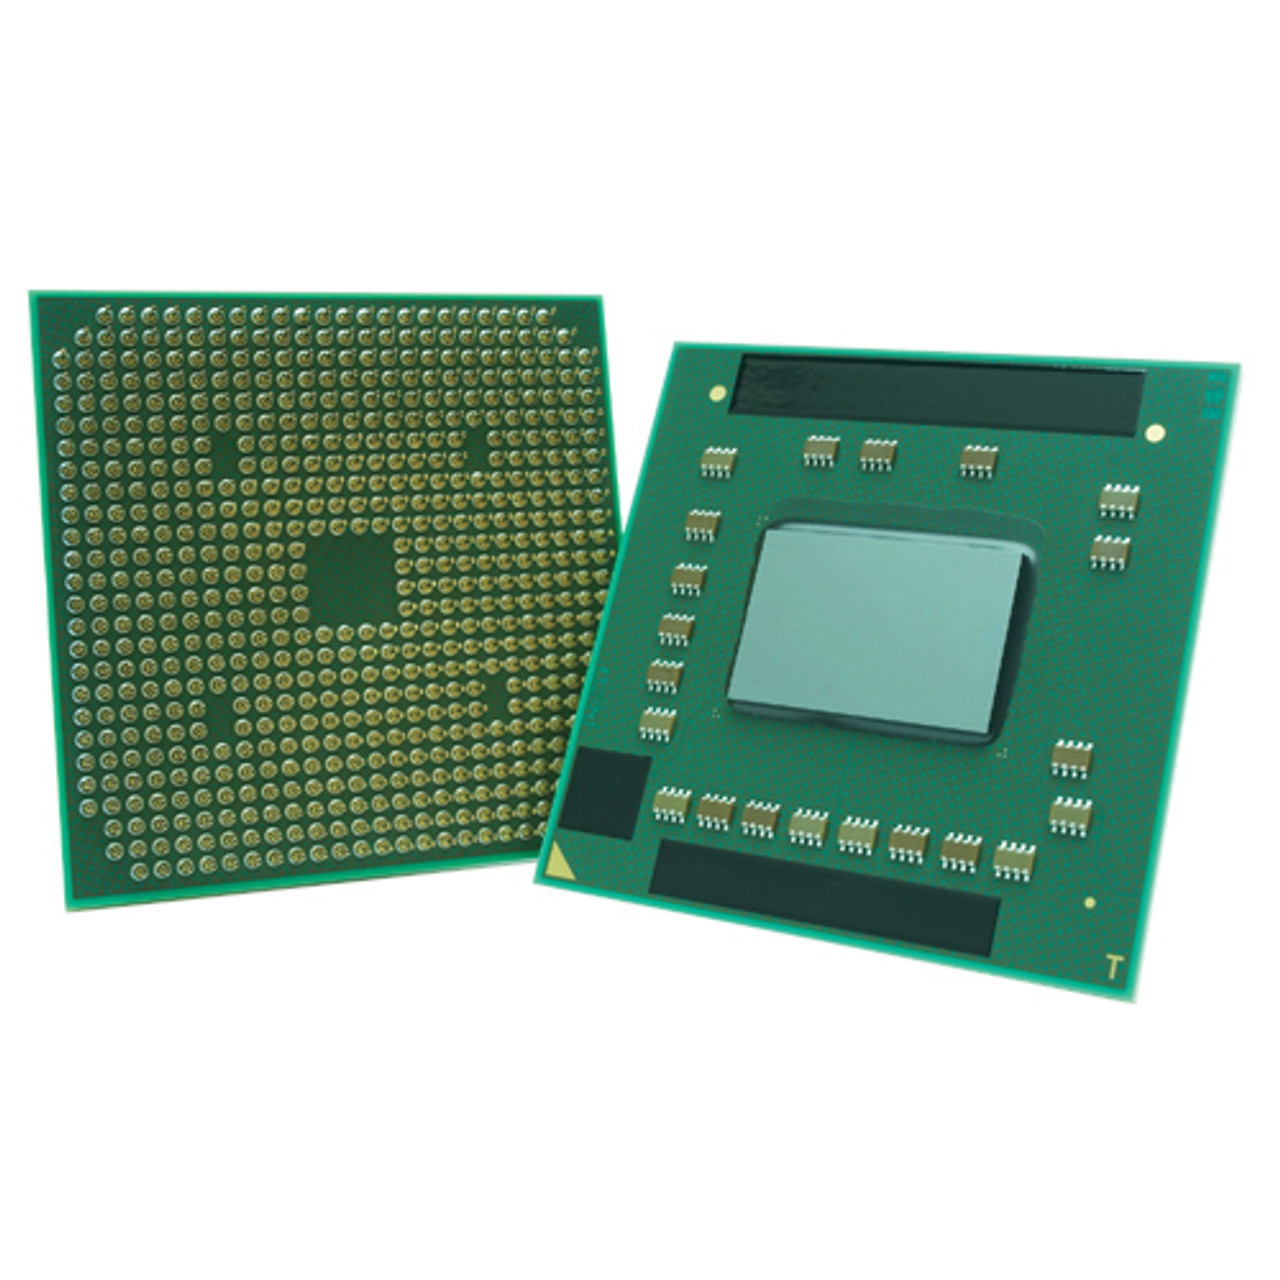 AMD TMZM82DAM23GG